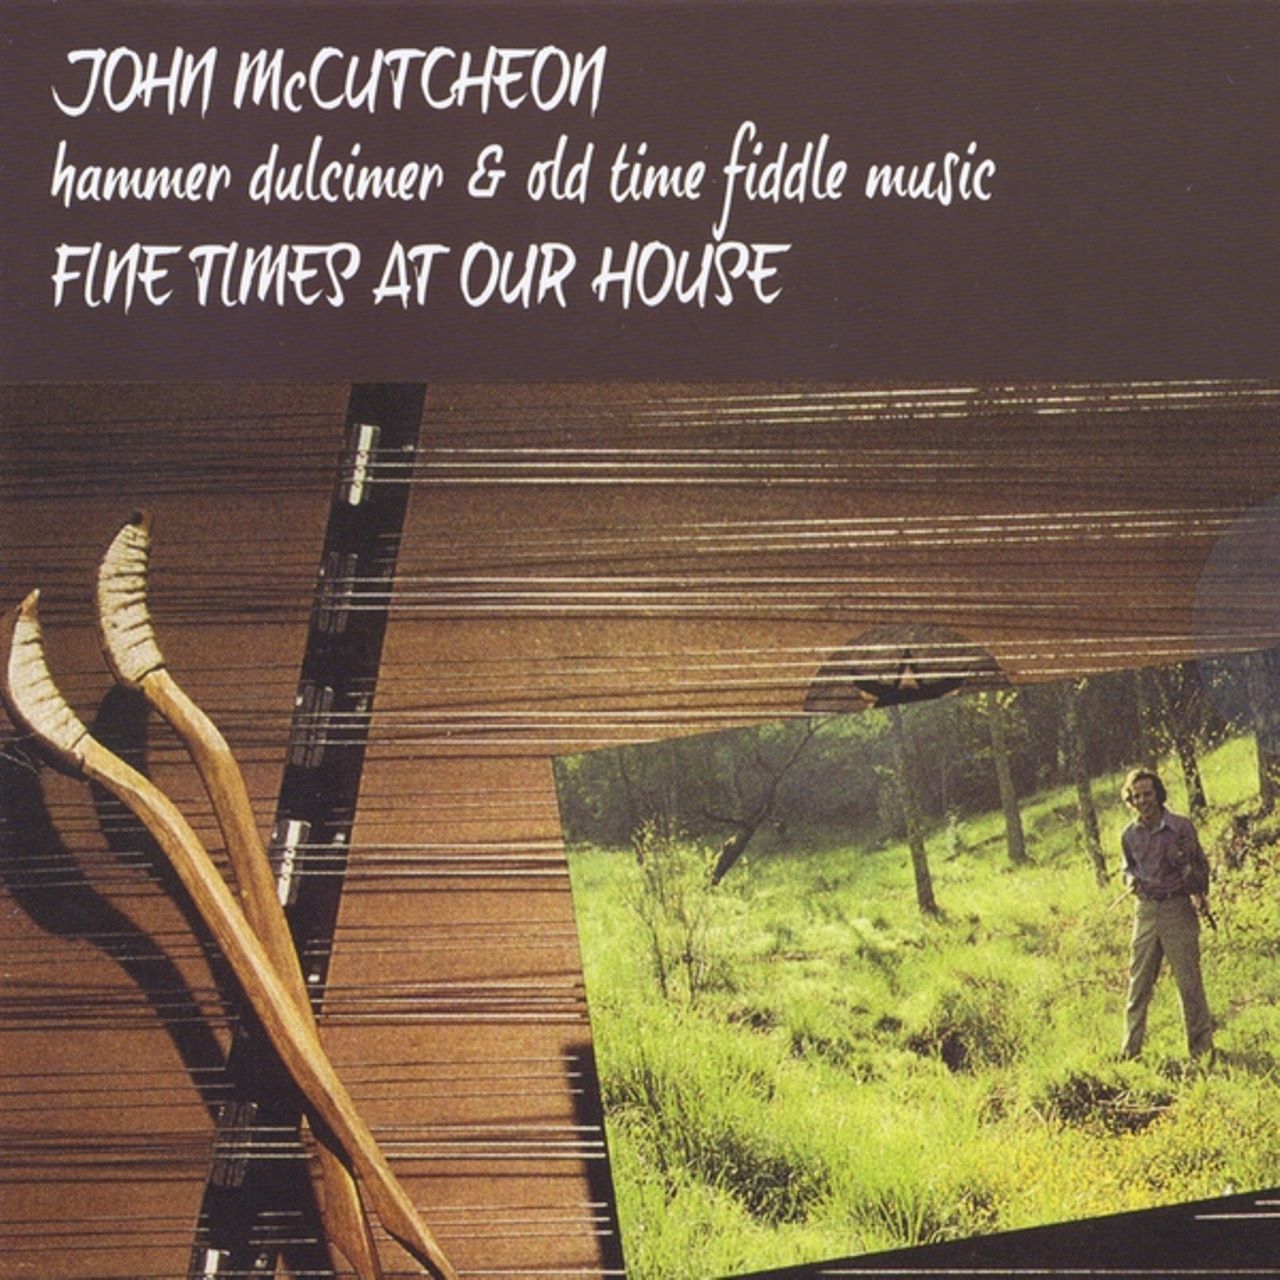 John McCutcheon – Fine Times At Our House cover album